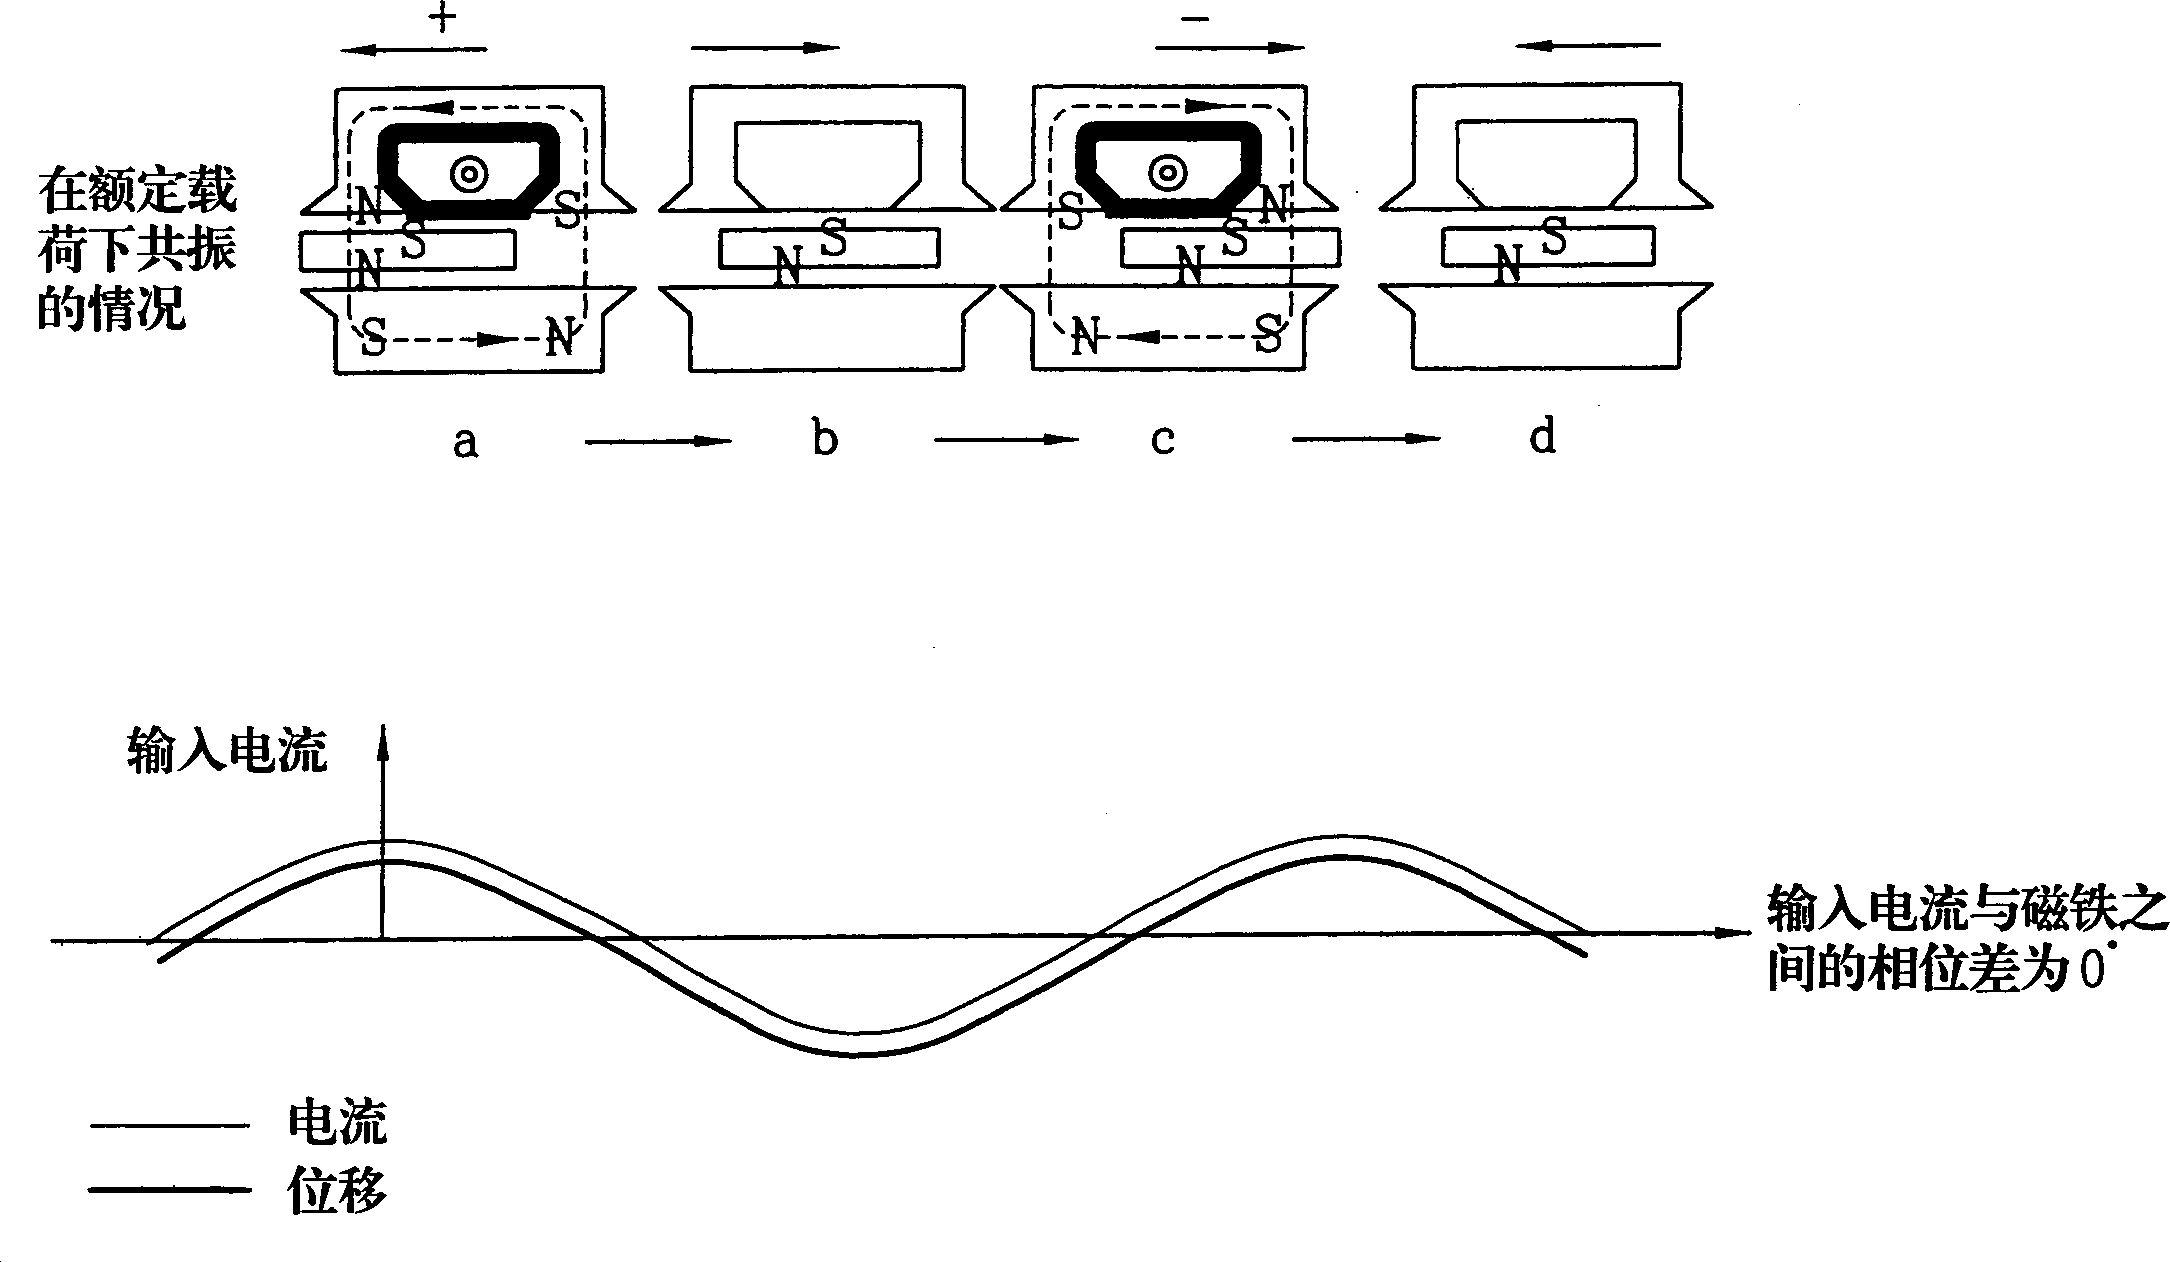 Operatio control method of reciprocating compressor